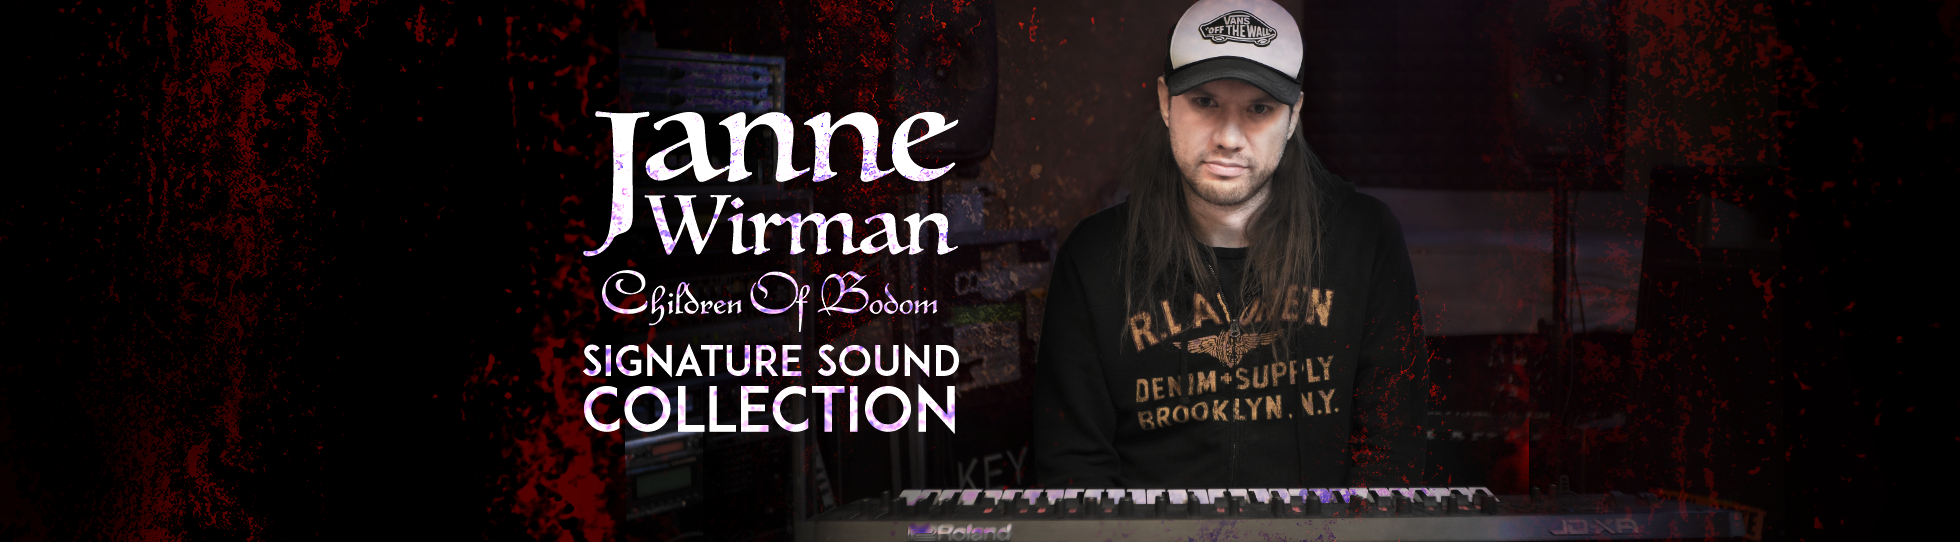 Janne Wirman (COB) Signature Sound Collection